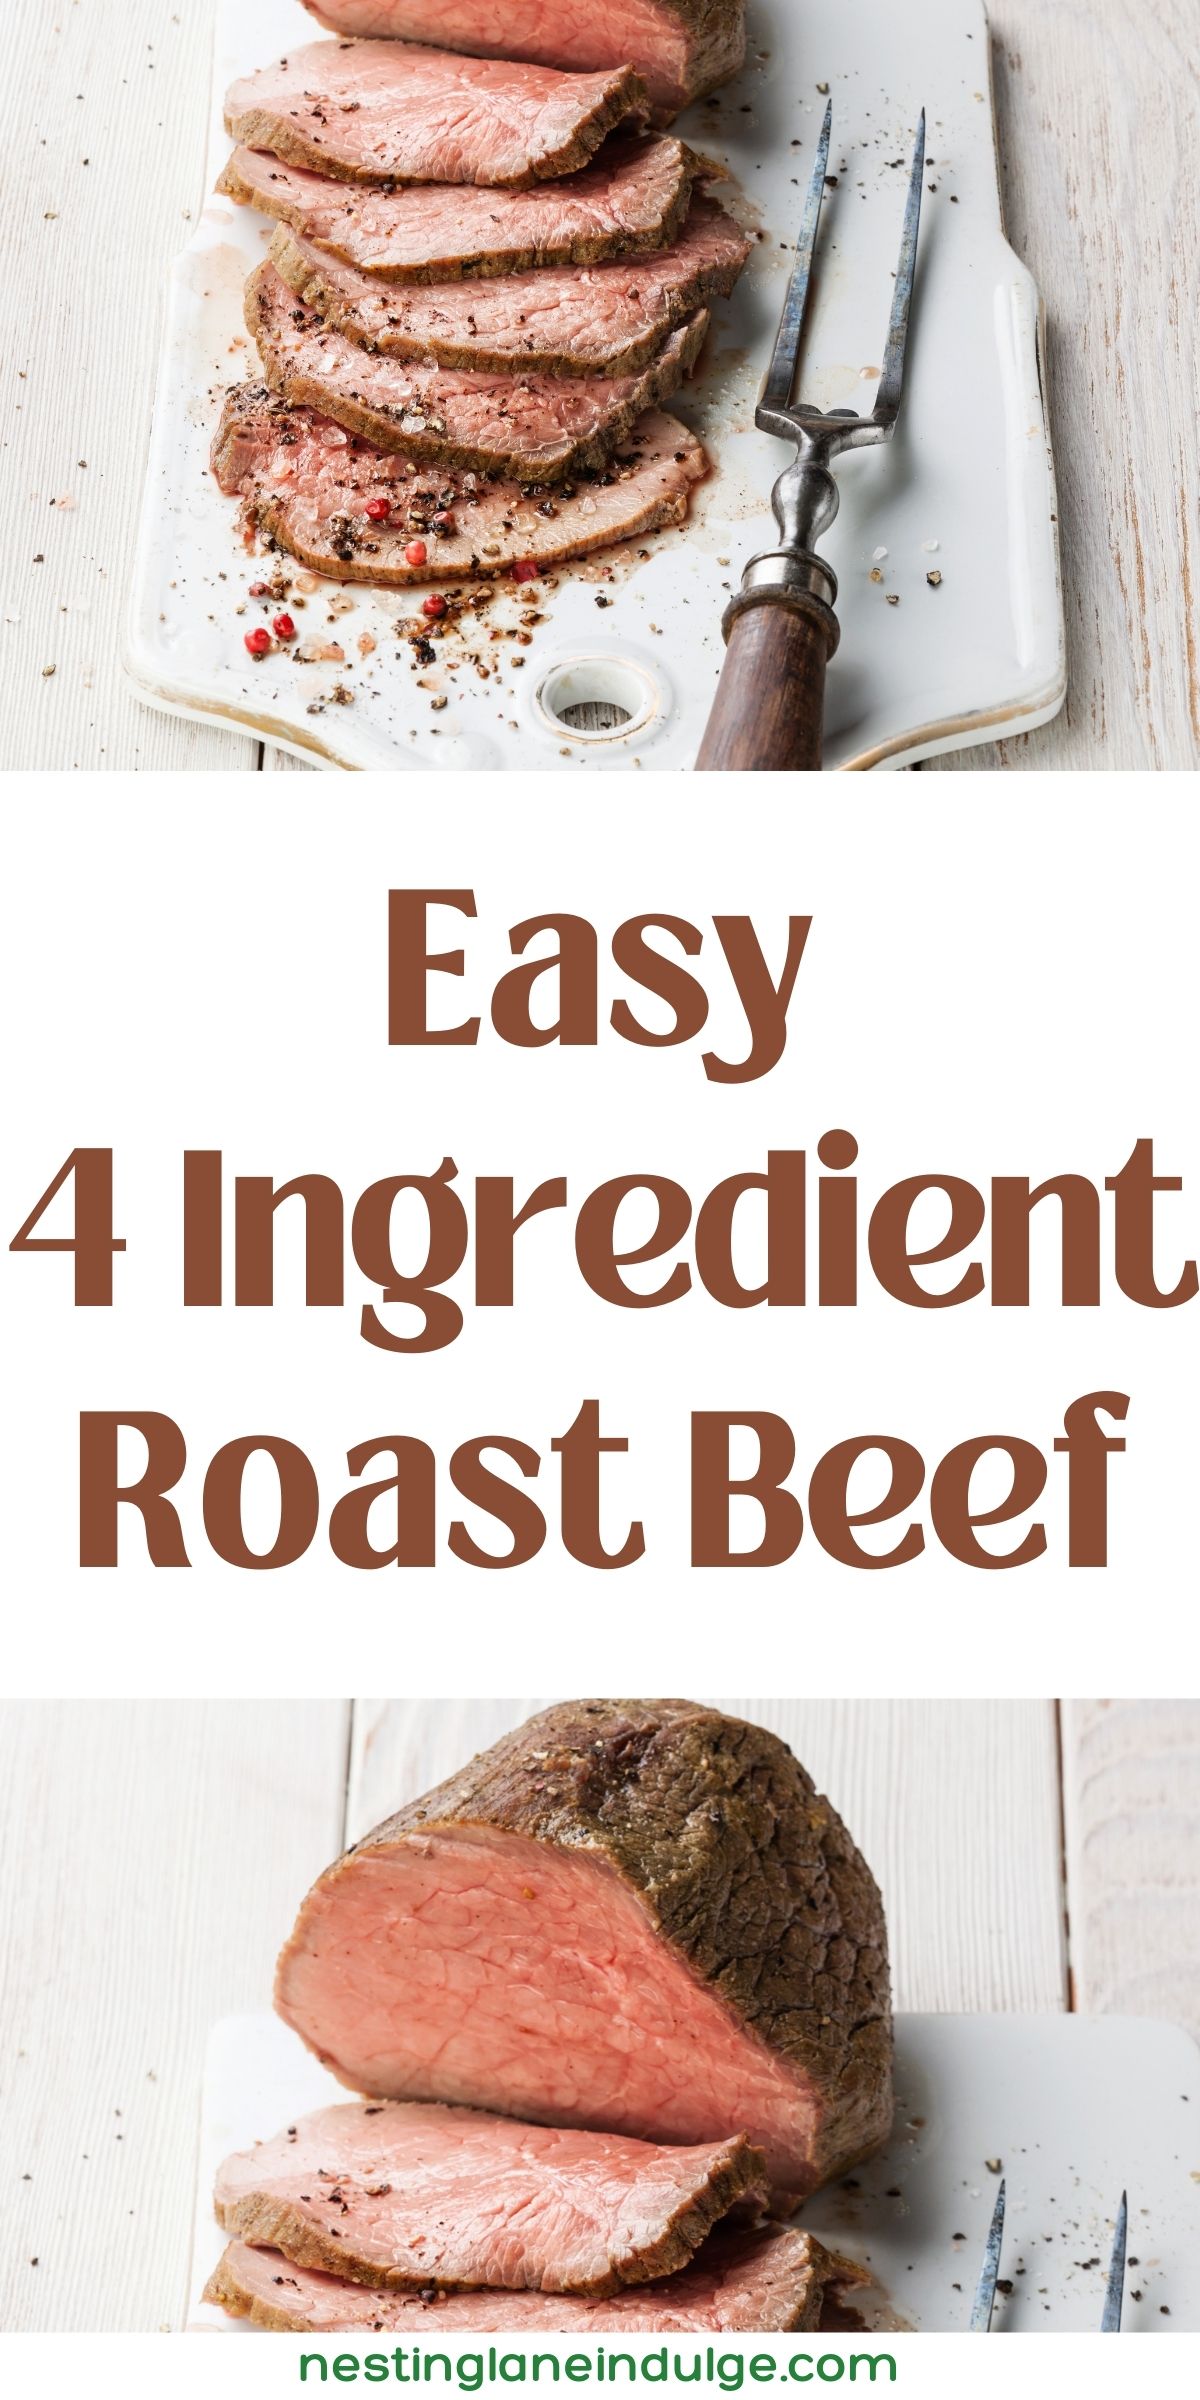 Easy 4 Ingredient Roast Beef Graphic.